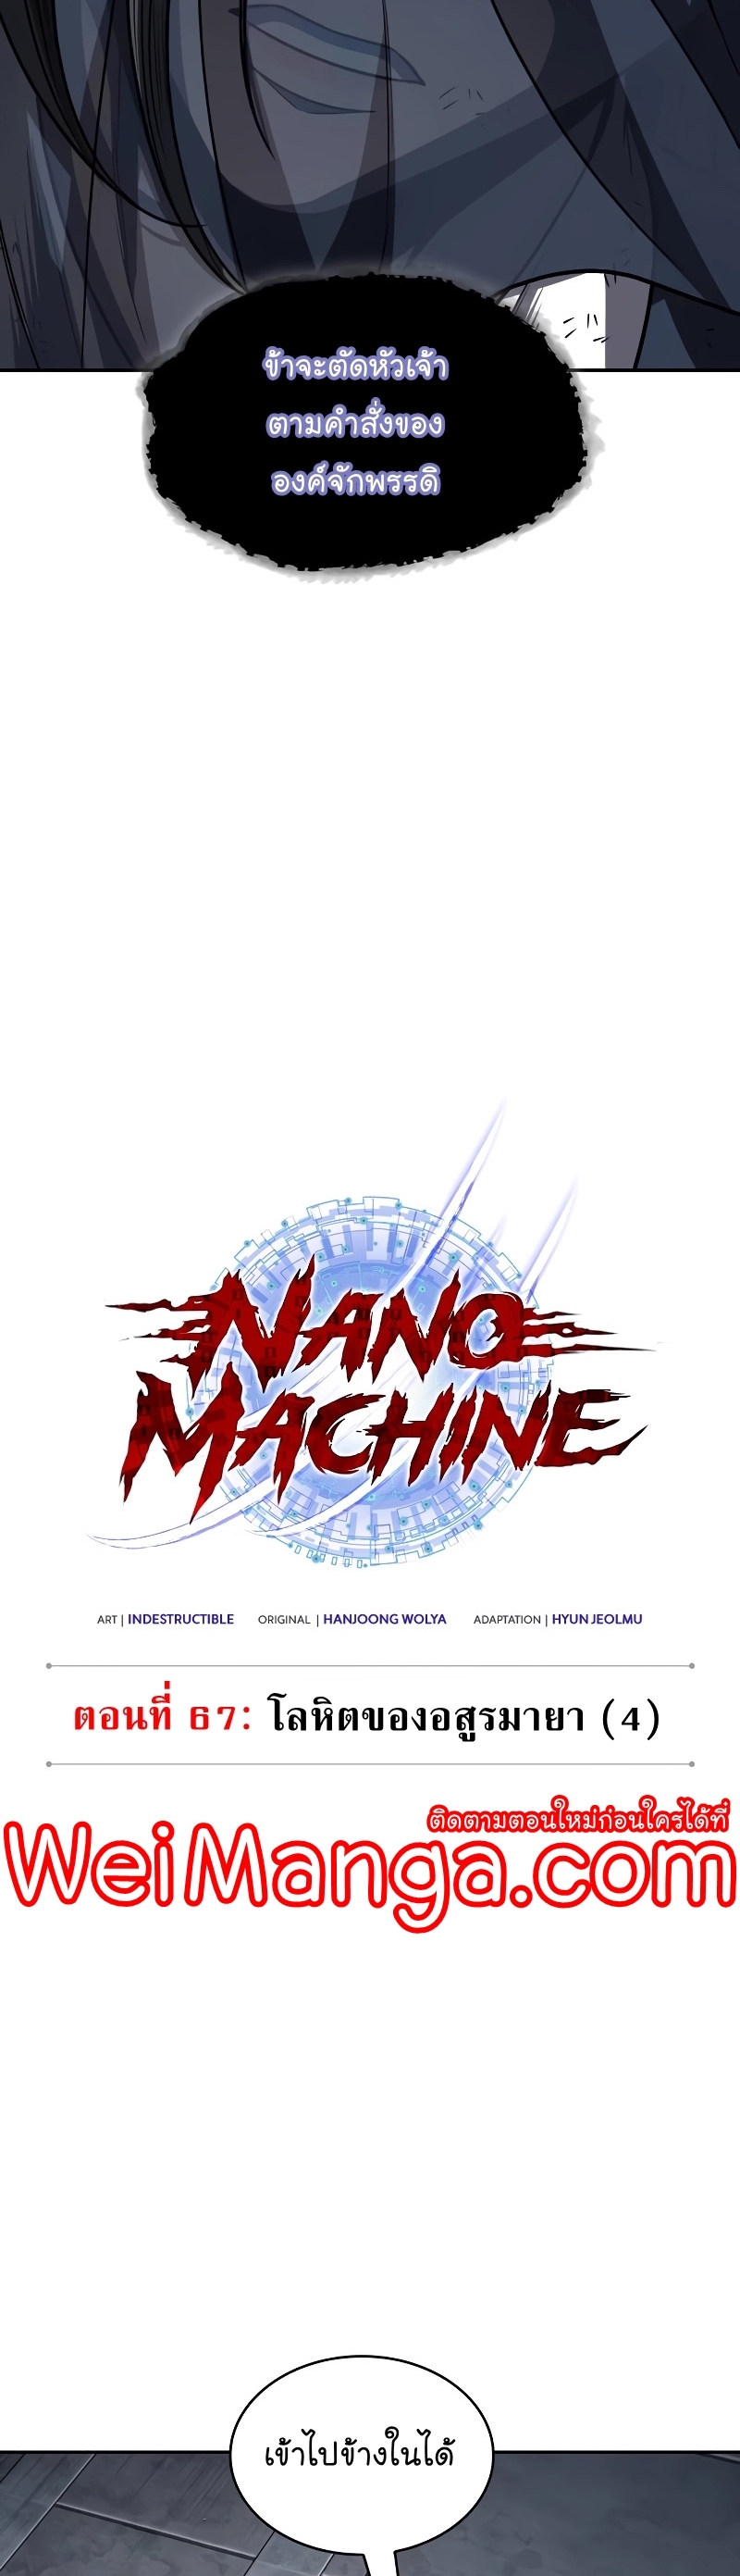 Nano Machine Wei Manga Manwha 198 (7)